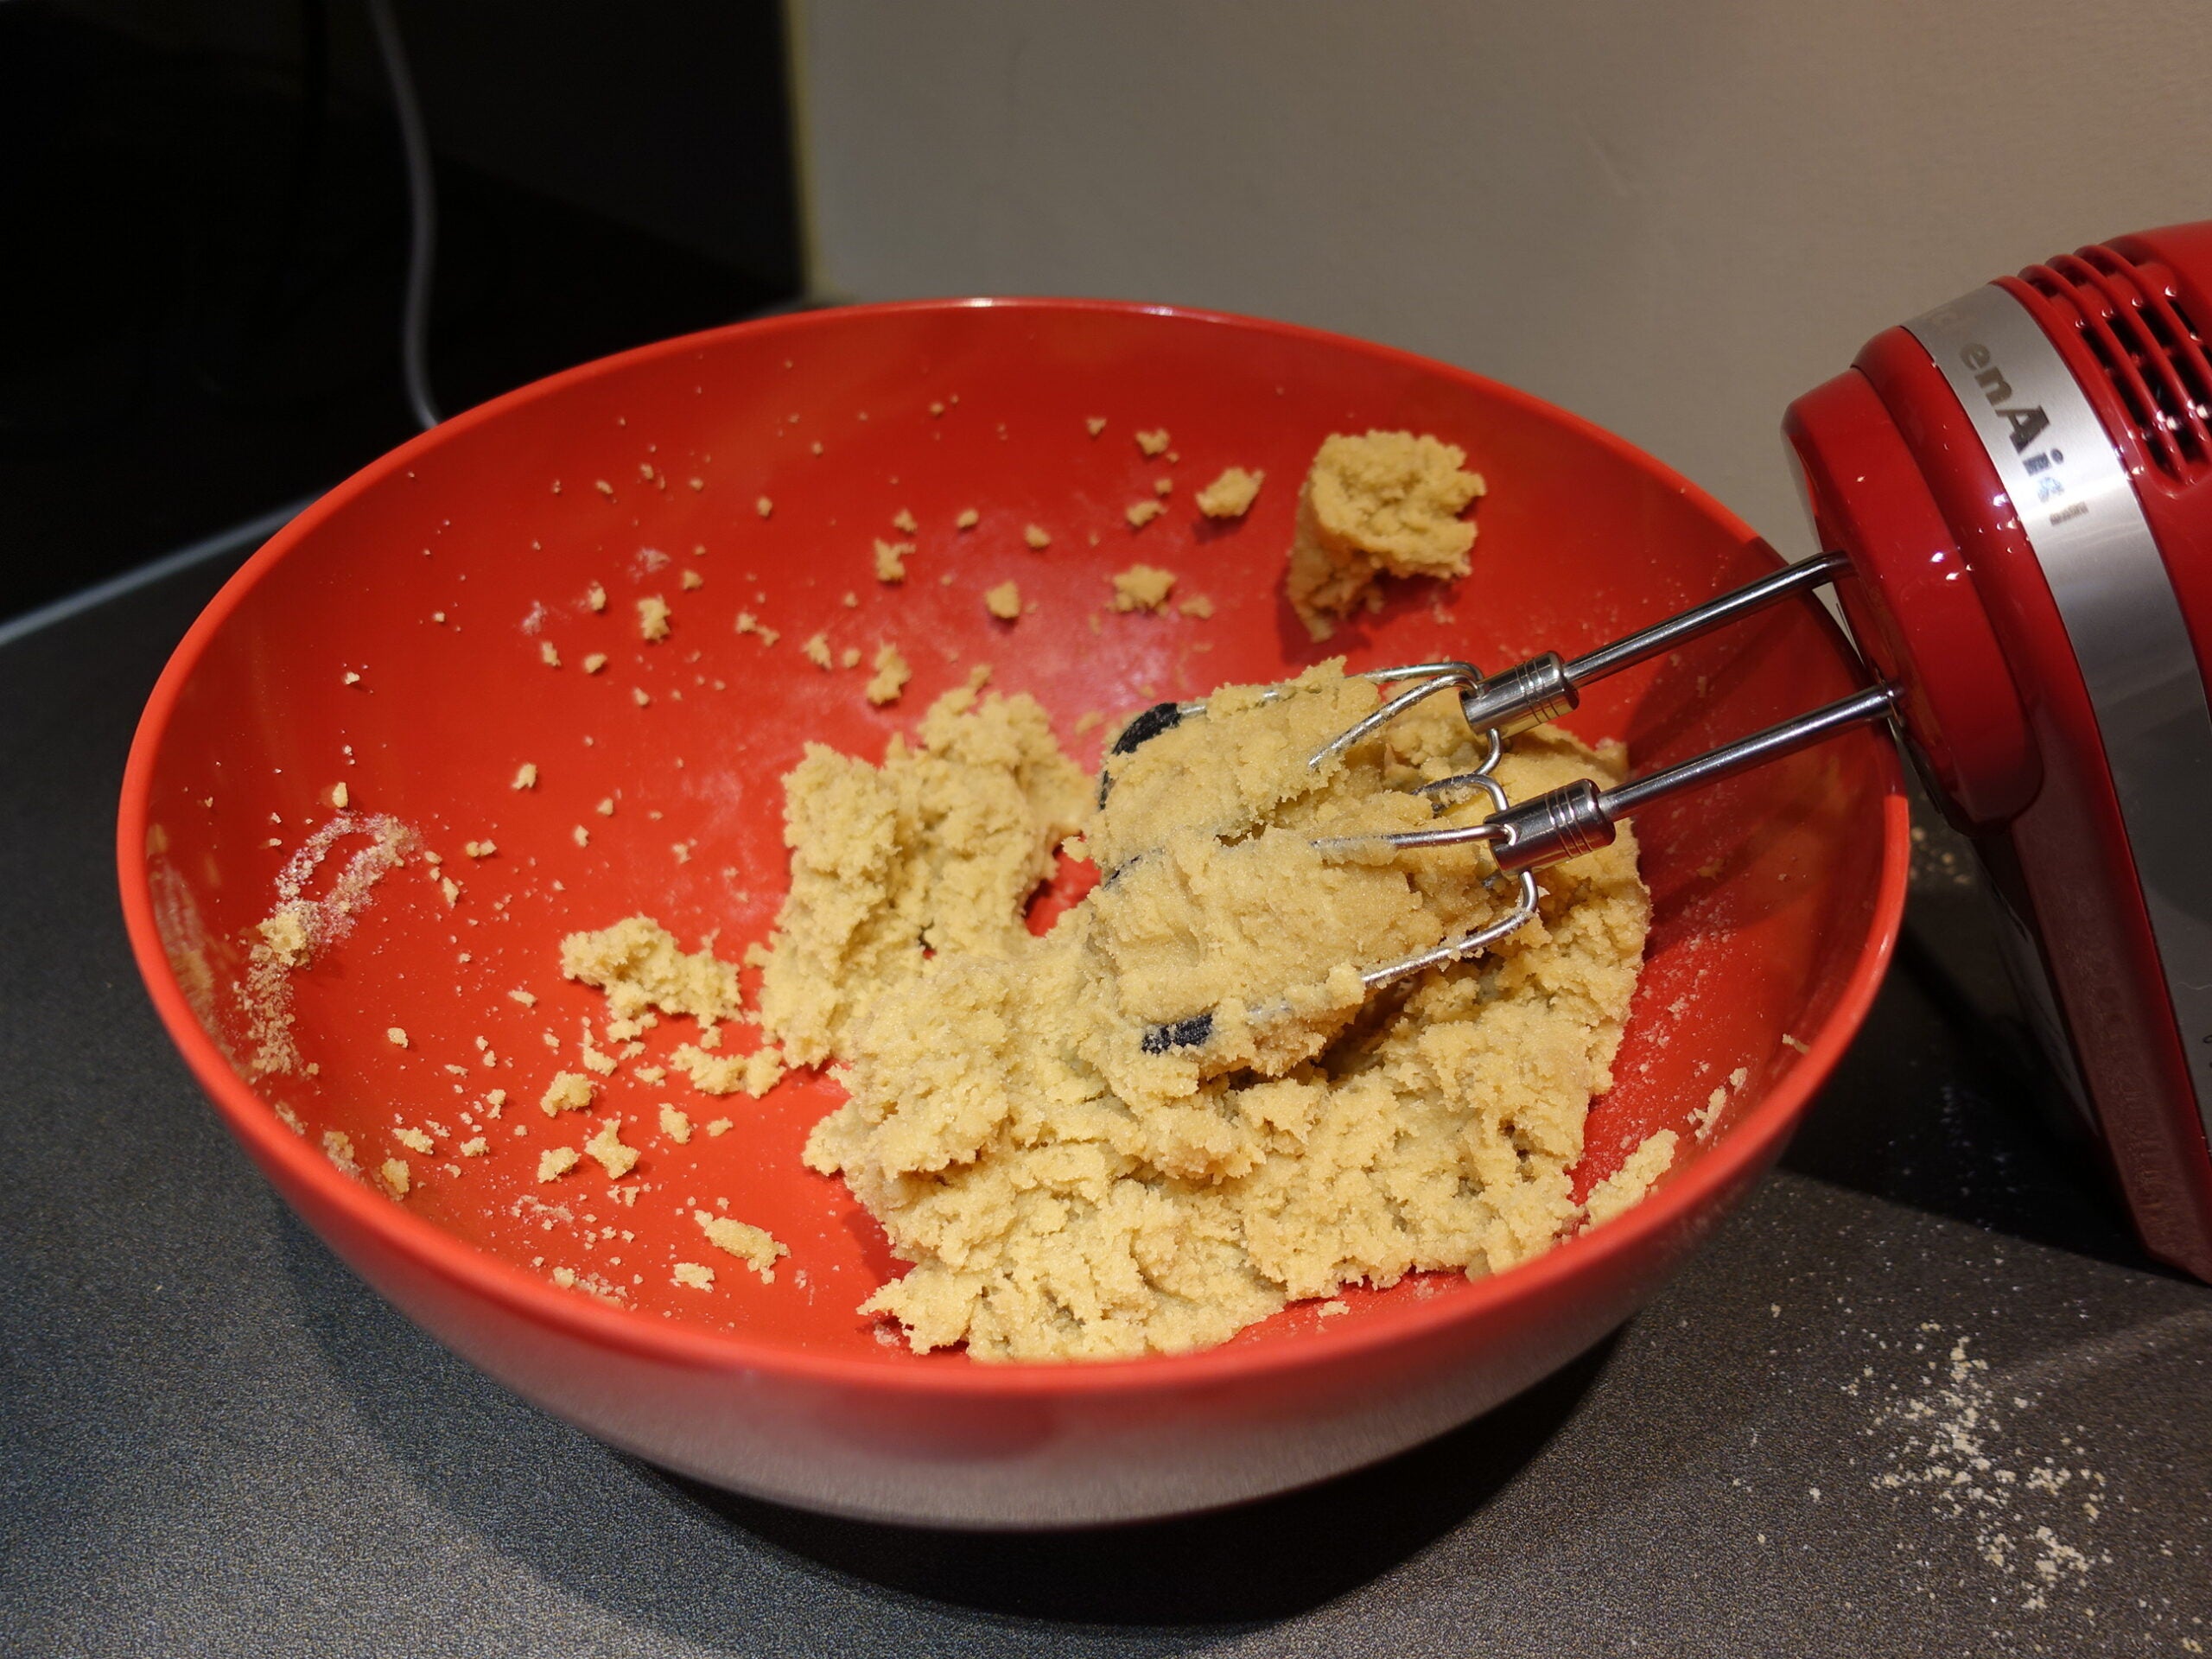 KitchenAid 6 Speed Hand Mixer with Flex Edge Beaters mixing dough